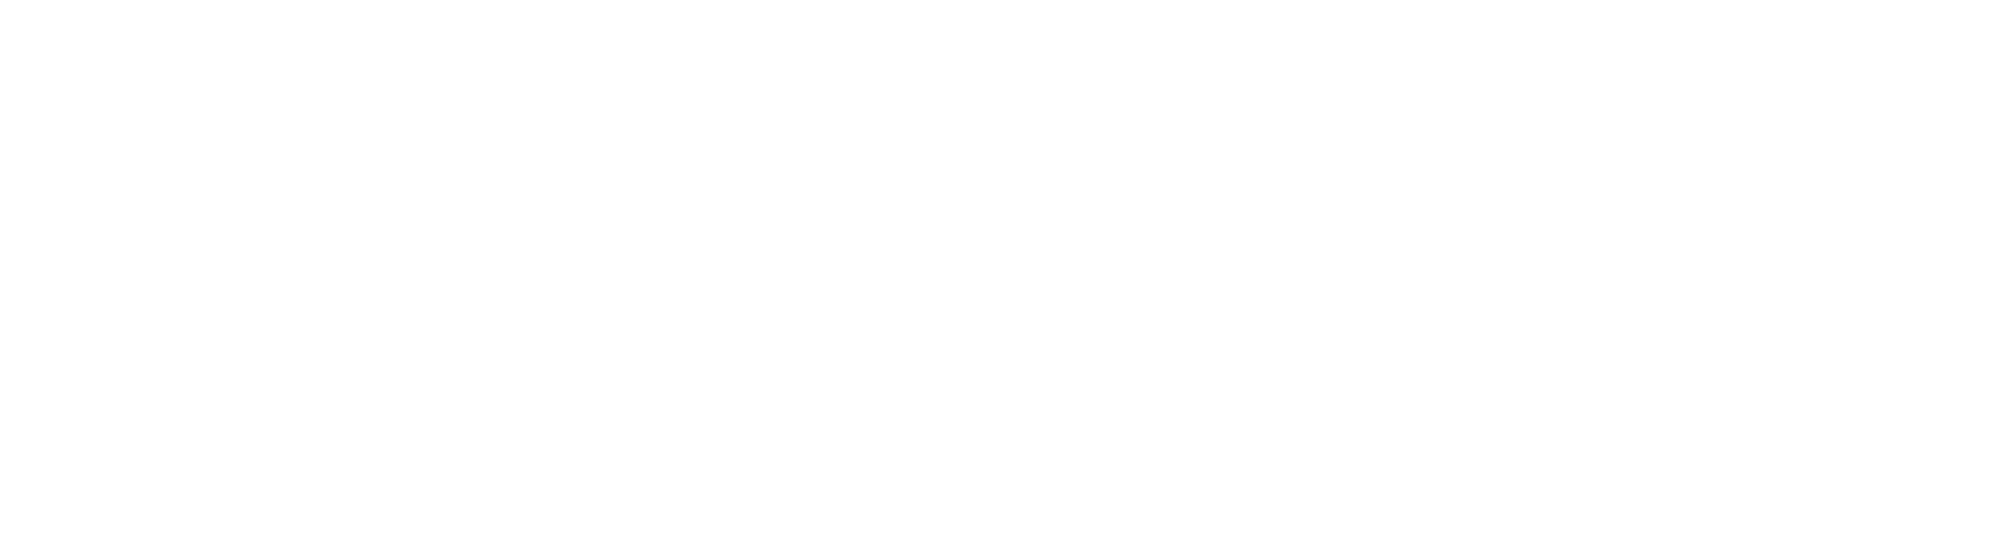 Dropbox-Logo-Corporate-Team-Building-NYC-white